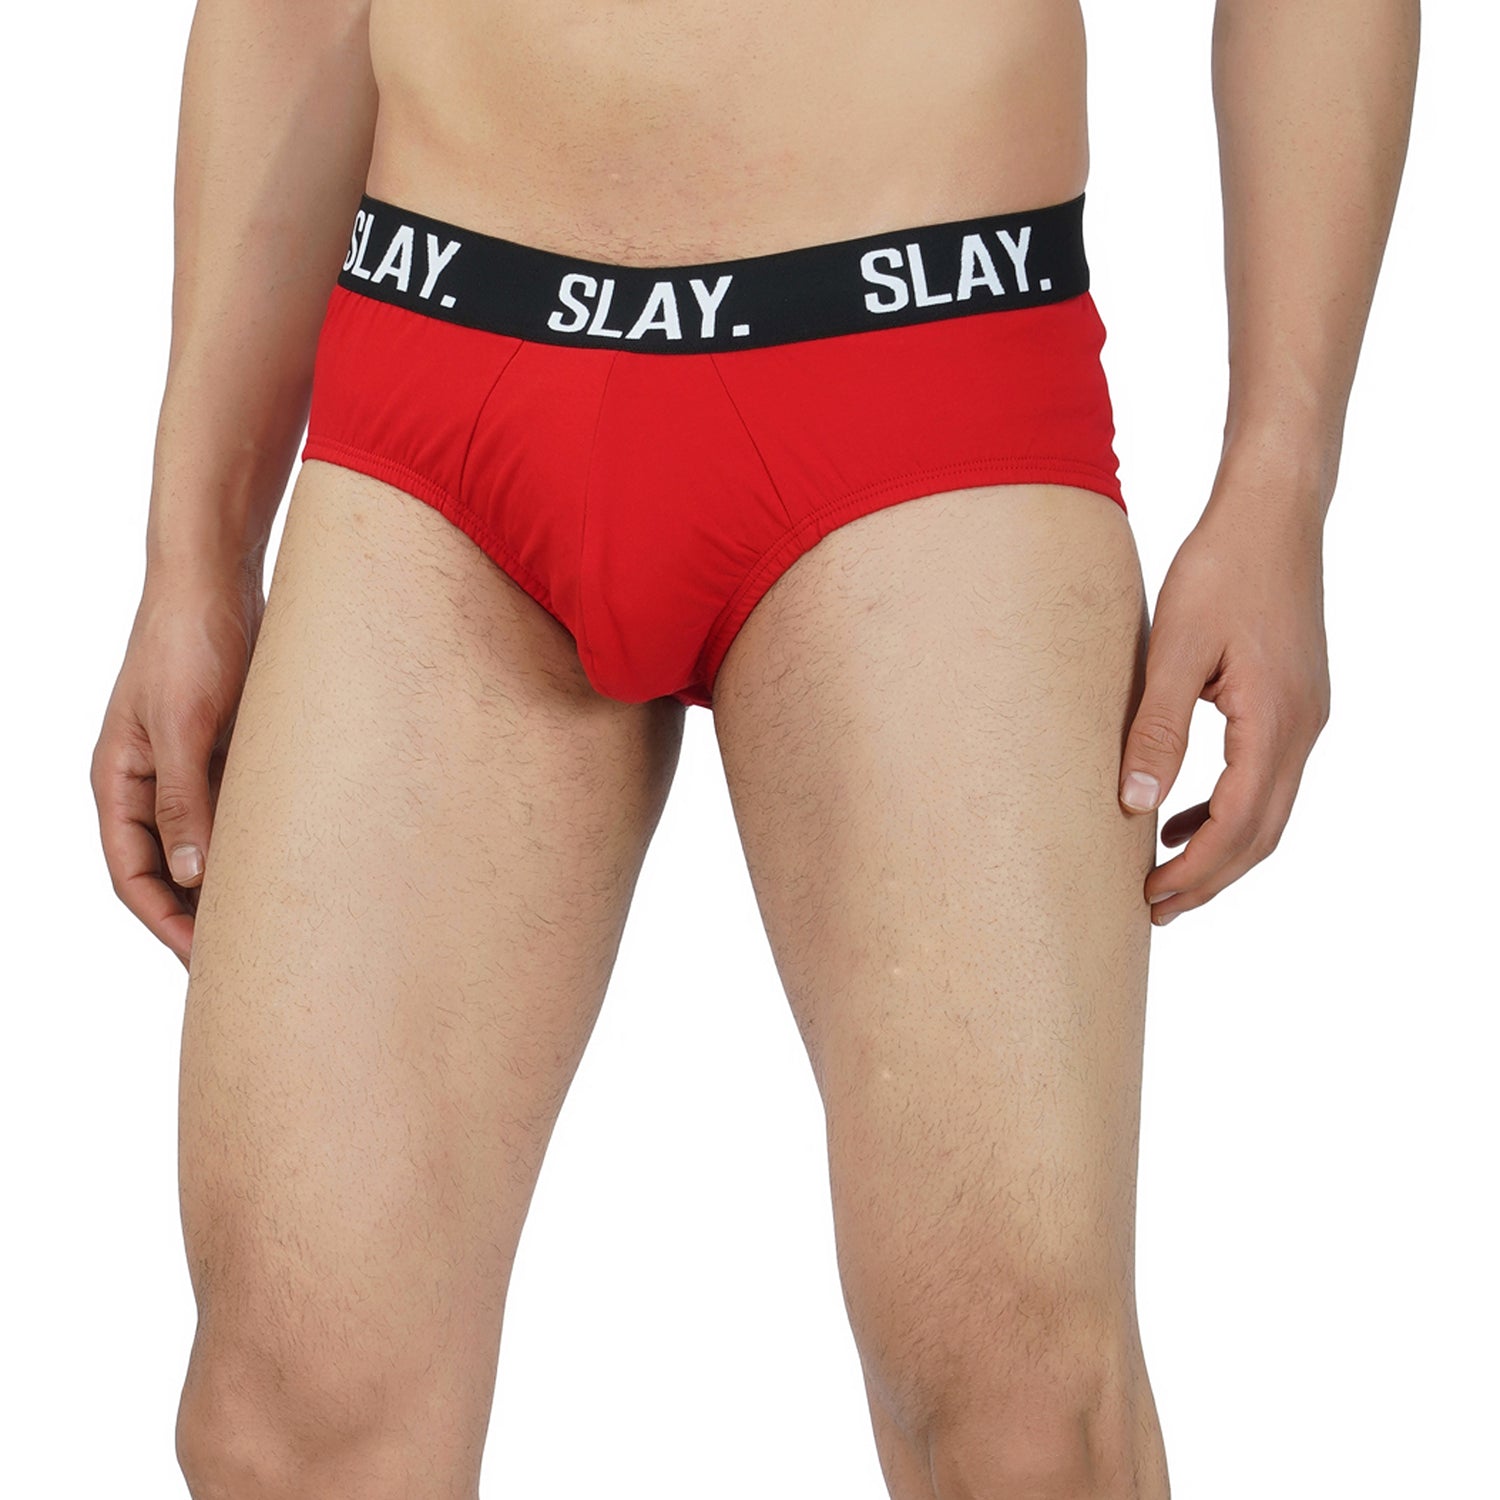 SLAY. Men's Red Underwear Cotton Briefs Men's briefs Men's boxers Men's  boxer briefs Men's trunks Fabric and Material: Cotton underwear for men  Modal